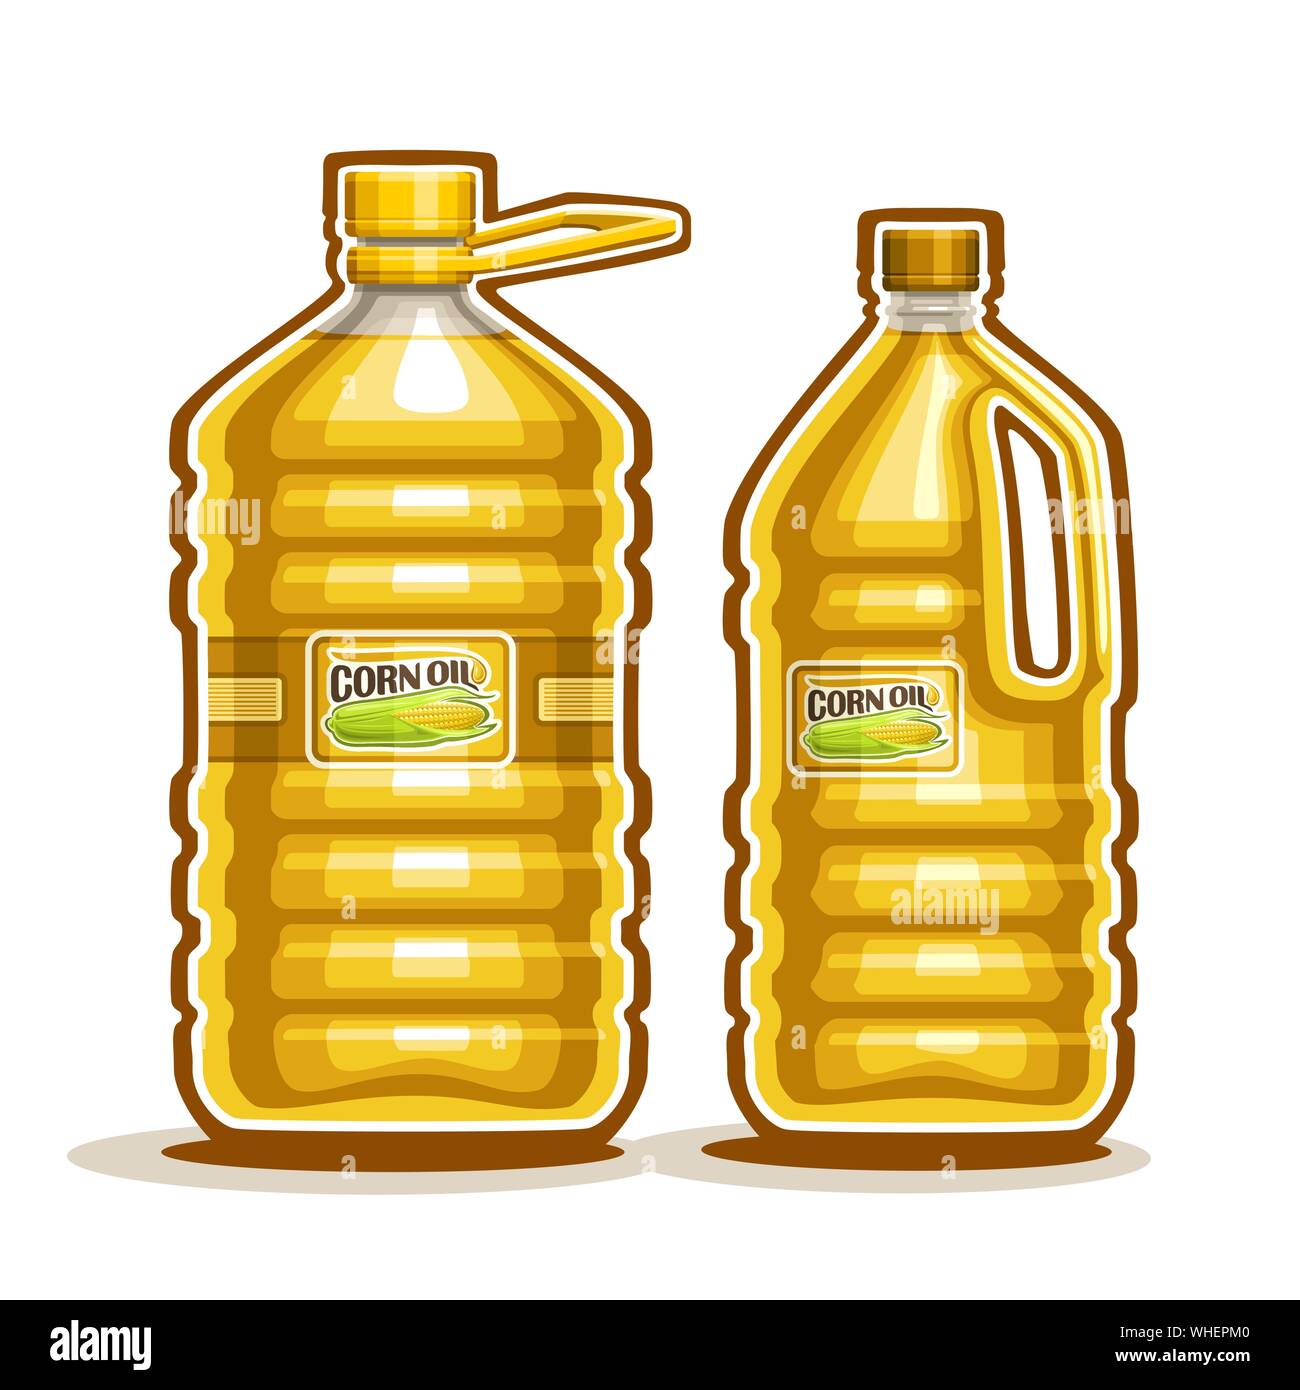 Caricatura de aceite fotografías e imágenes de alta resolución - Alamy